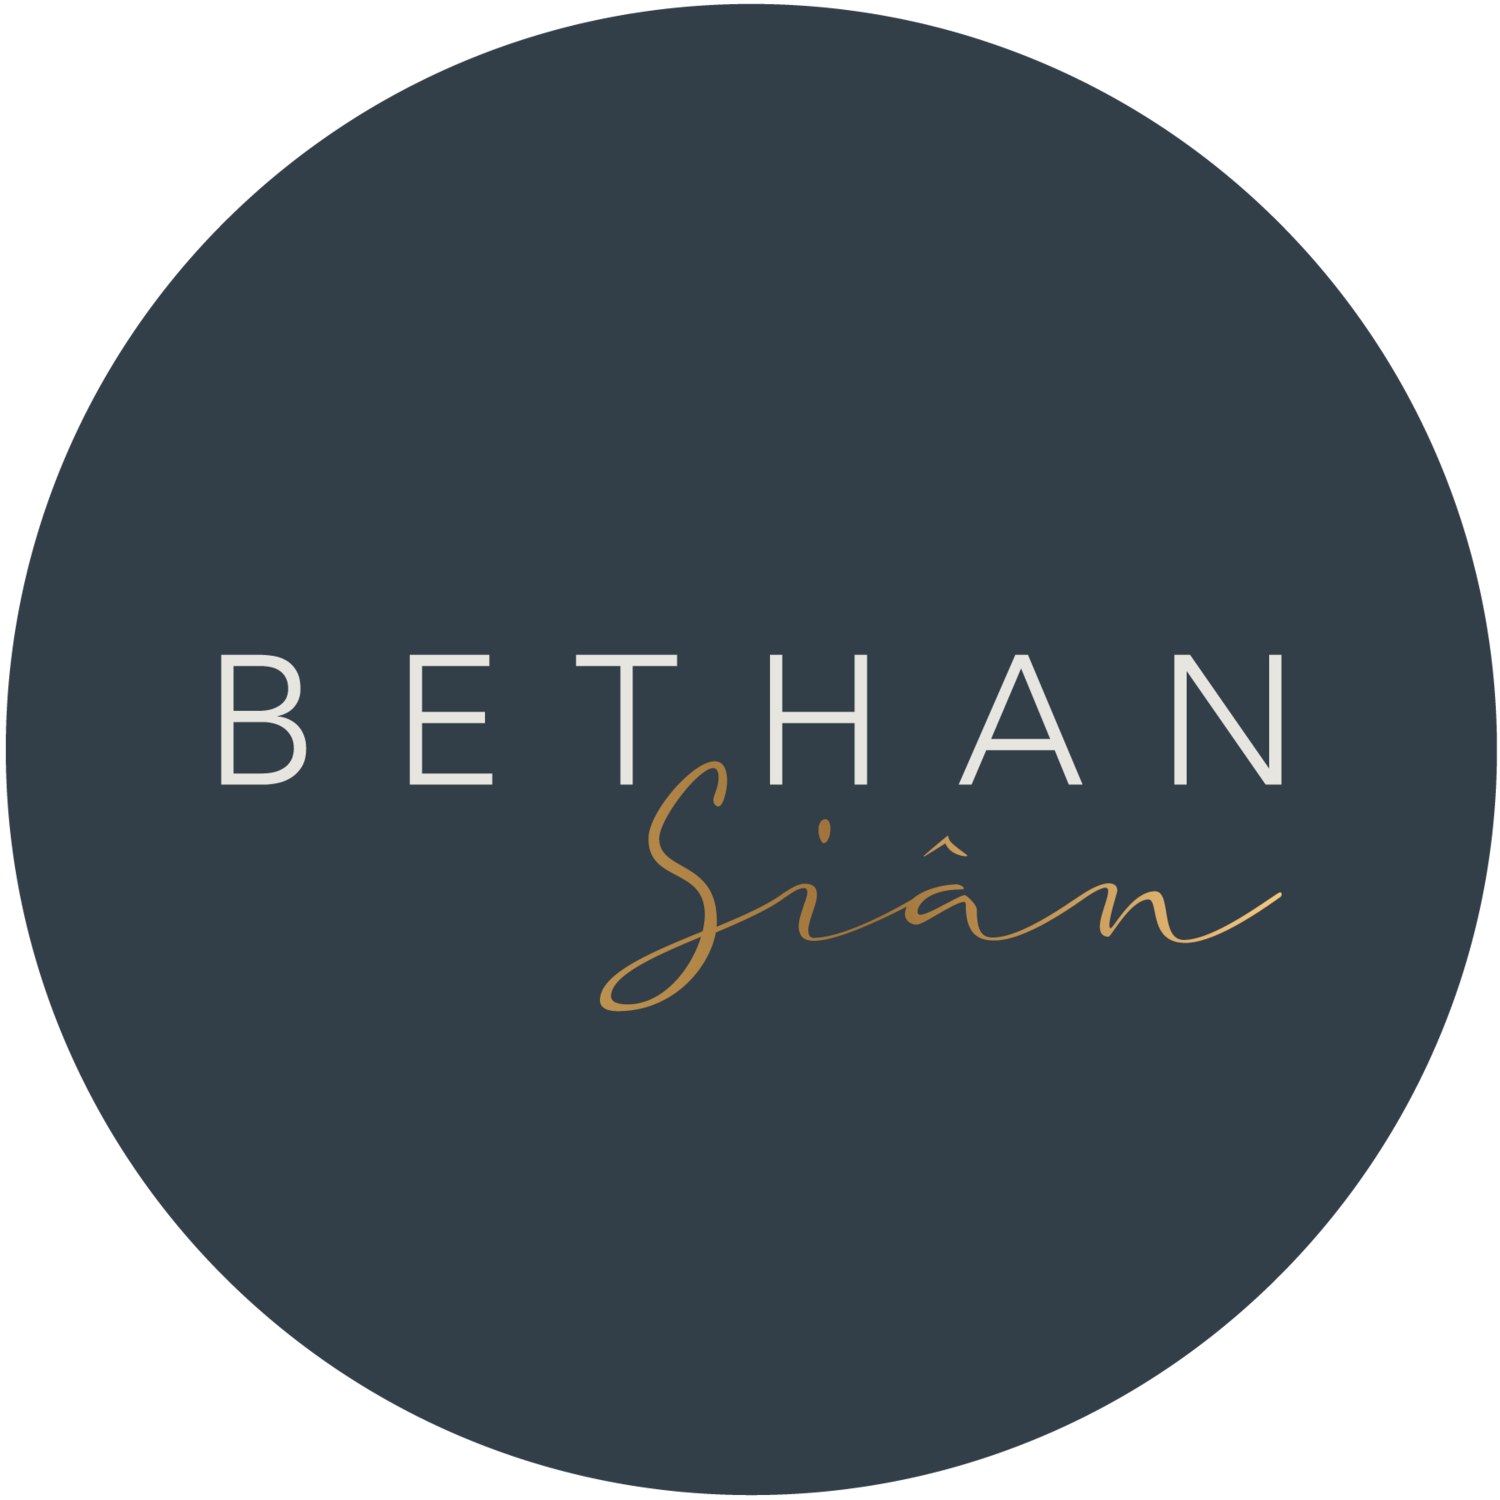 Bethan Sian